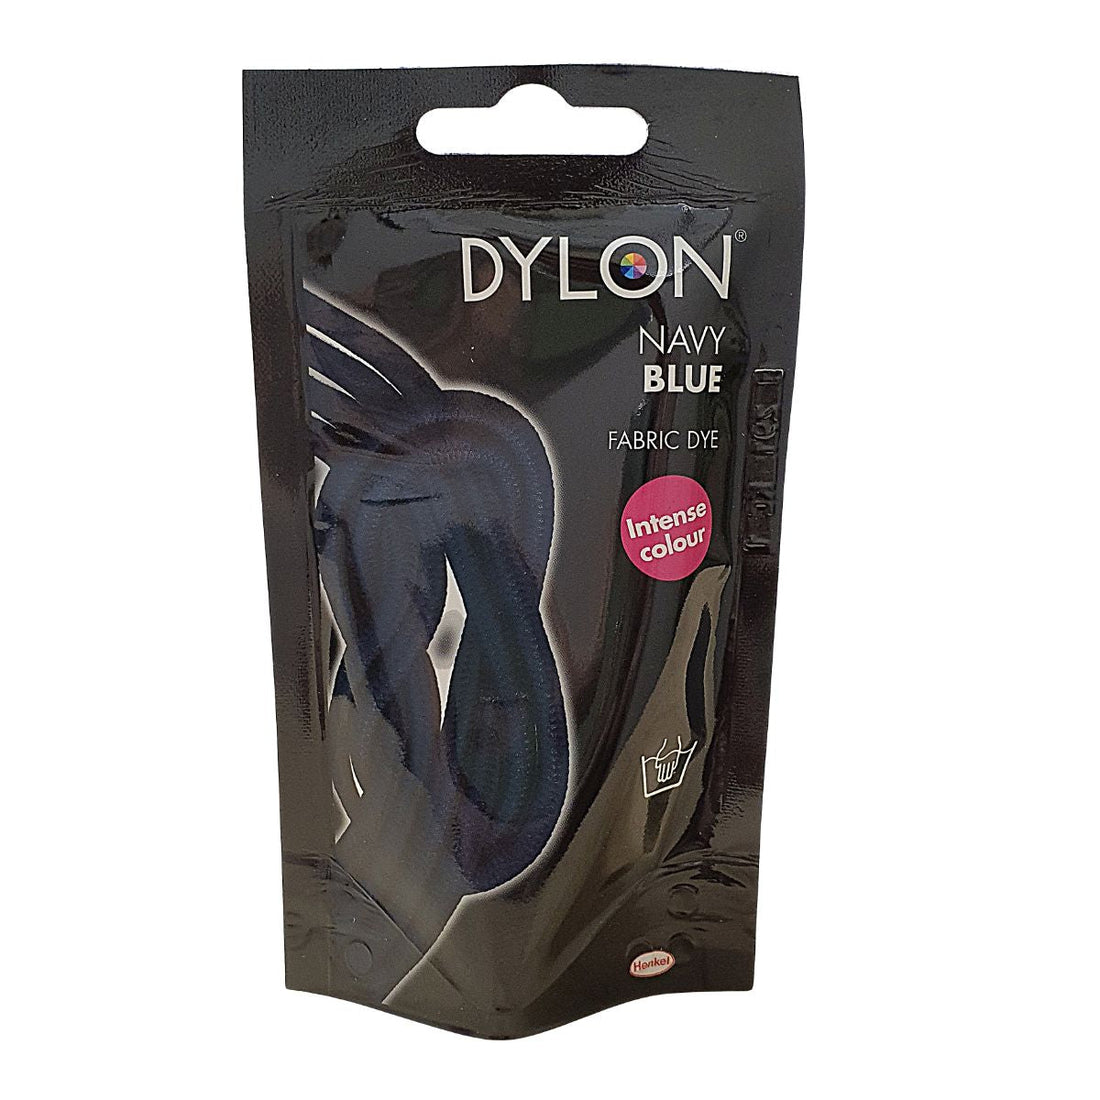 dylon hand fabric dye navy blue